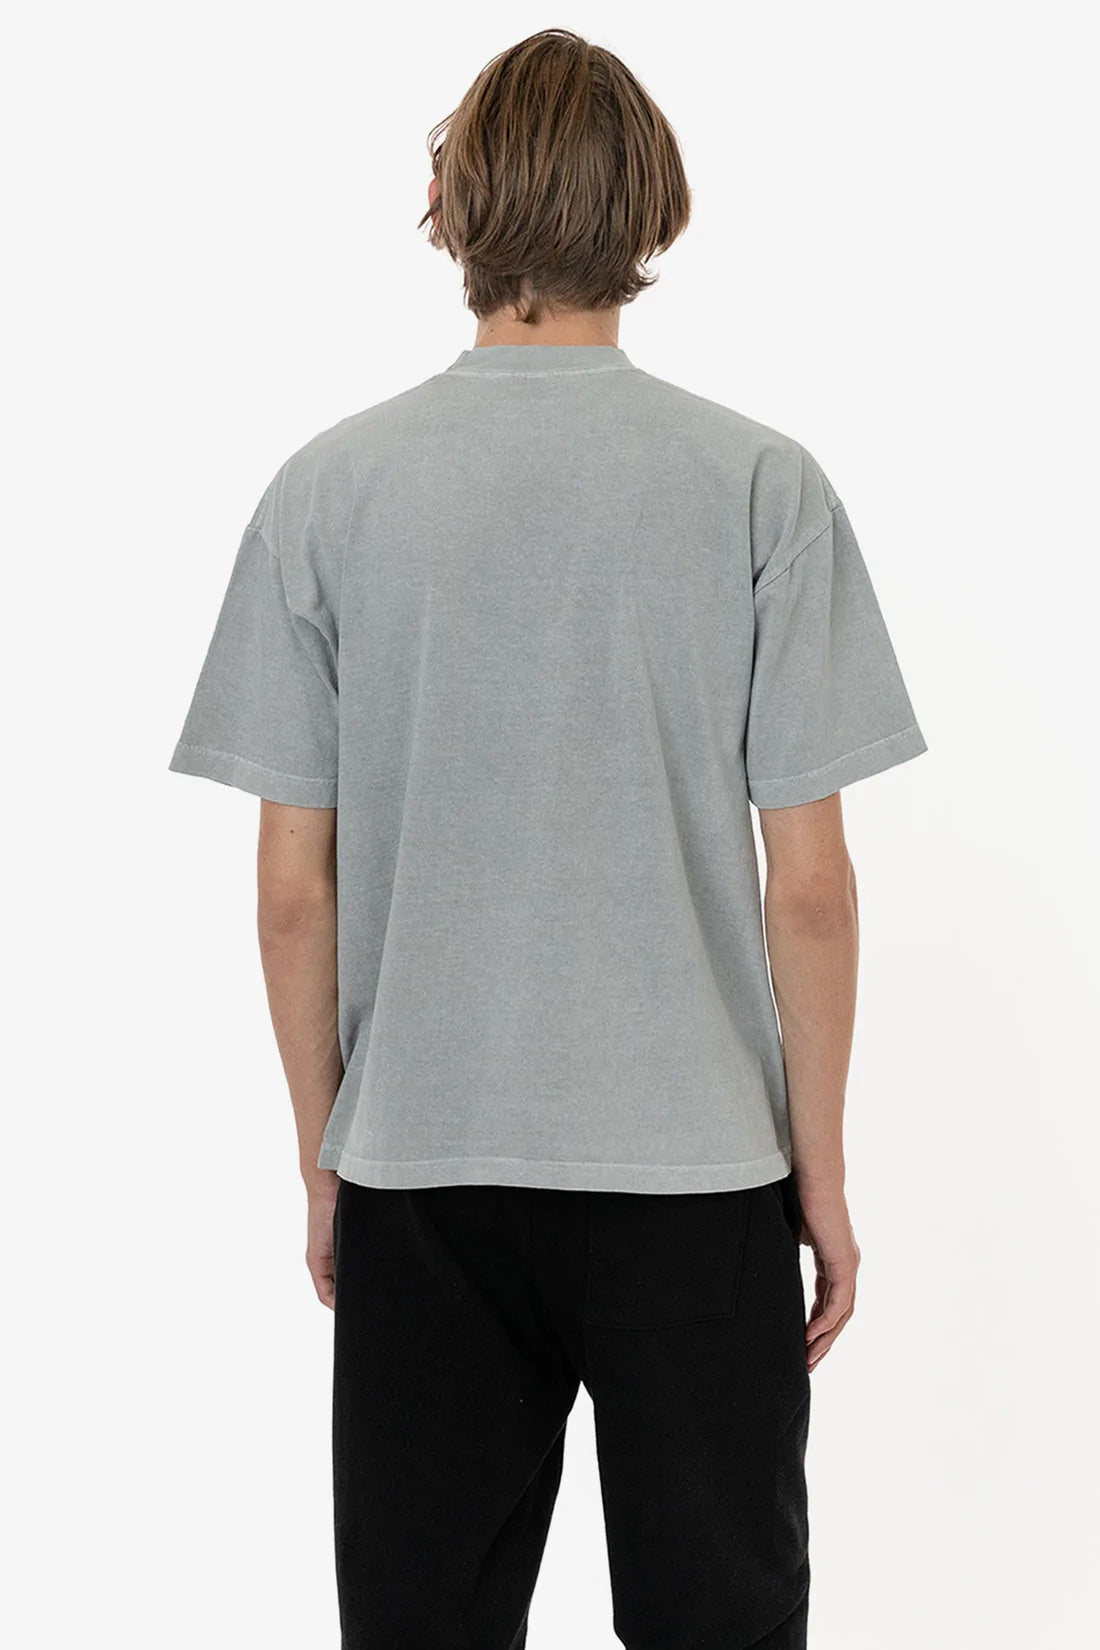 6.5 Oz. Garment Dye Crewneck T-Shirt - New Colors | Regular Size | LA Apparel